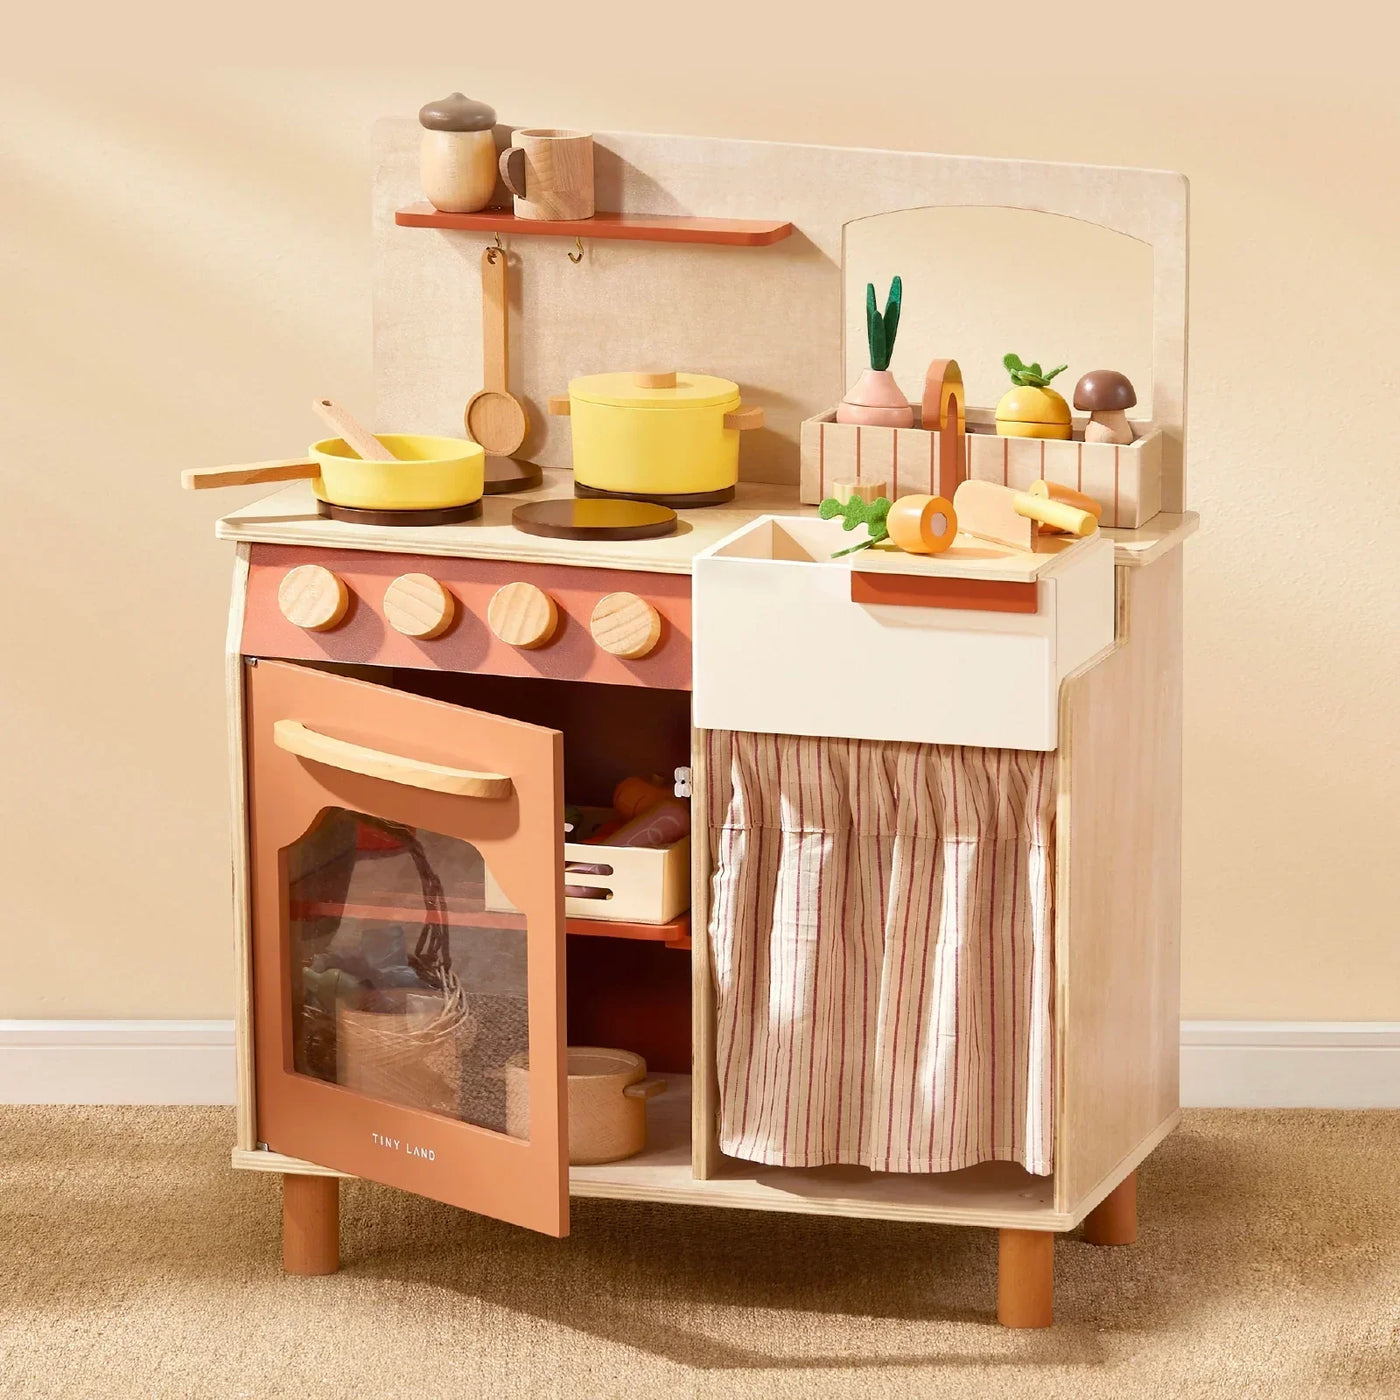 Tiny Land® Modern & Versatile Wooden Kids Play Kitchen Tiny Land